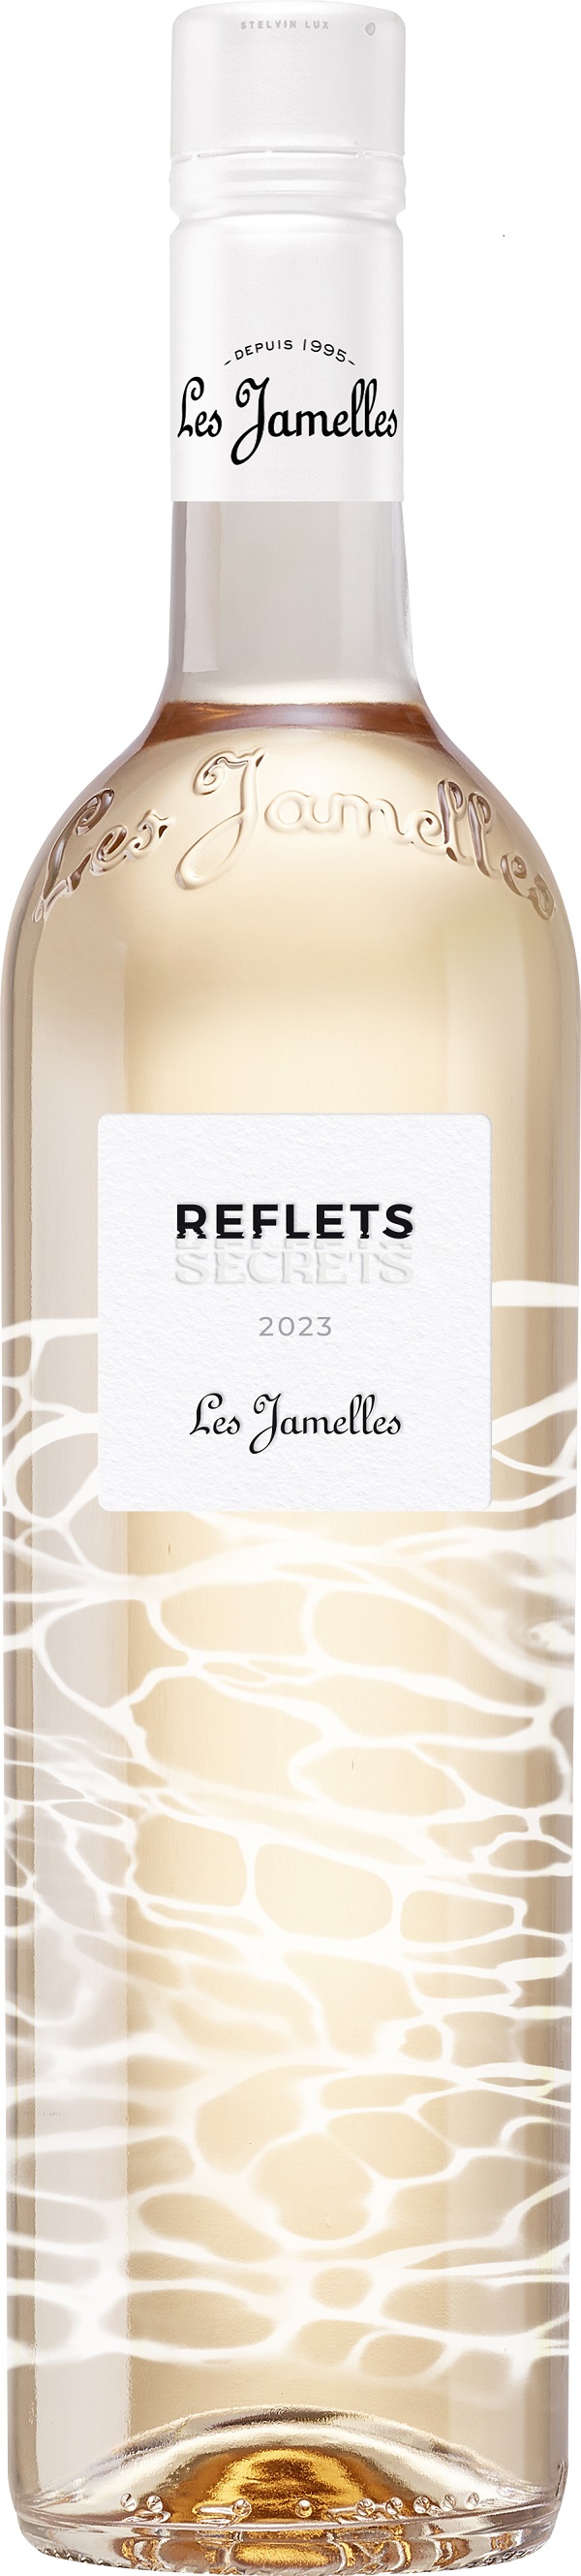 Les Jamelles Reflets Secrets Rose 2023 0.75 l Pays d'Oc Rosewein